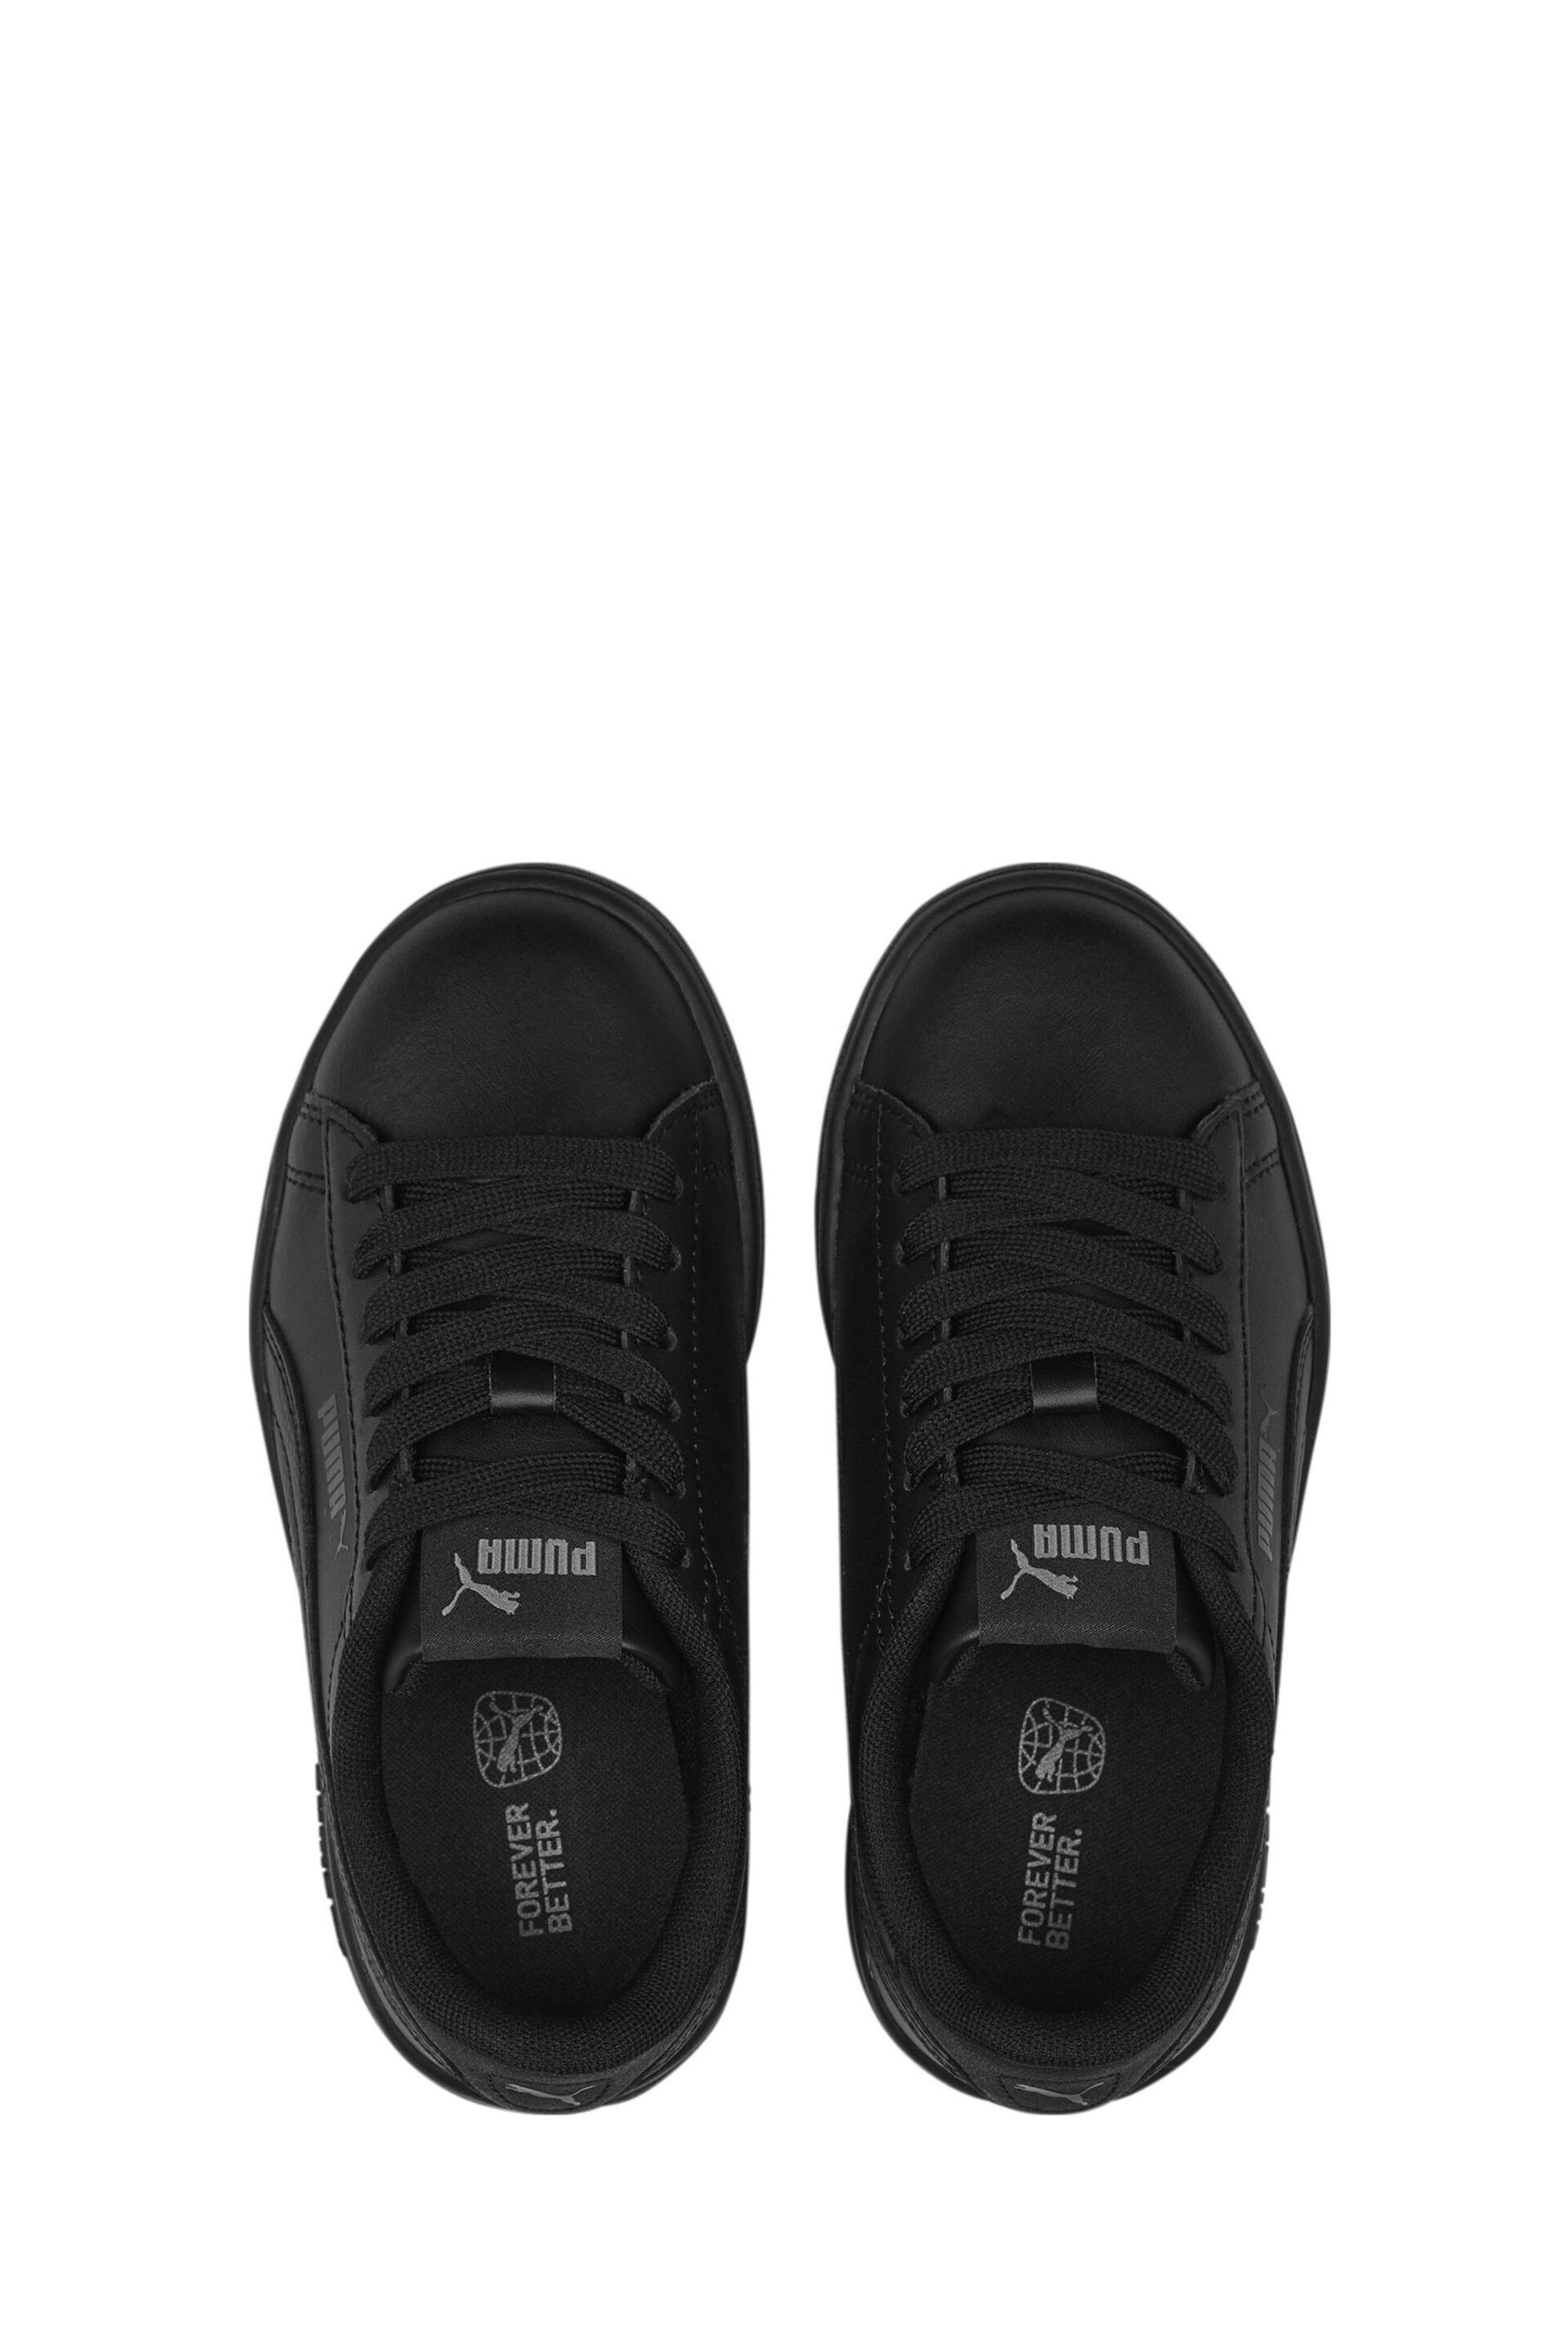 Puma Black Smash 3.0 L Shoes - Image 4 of 6